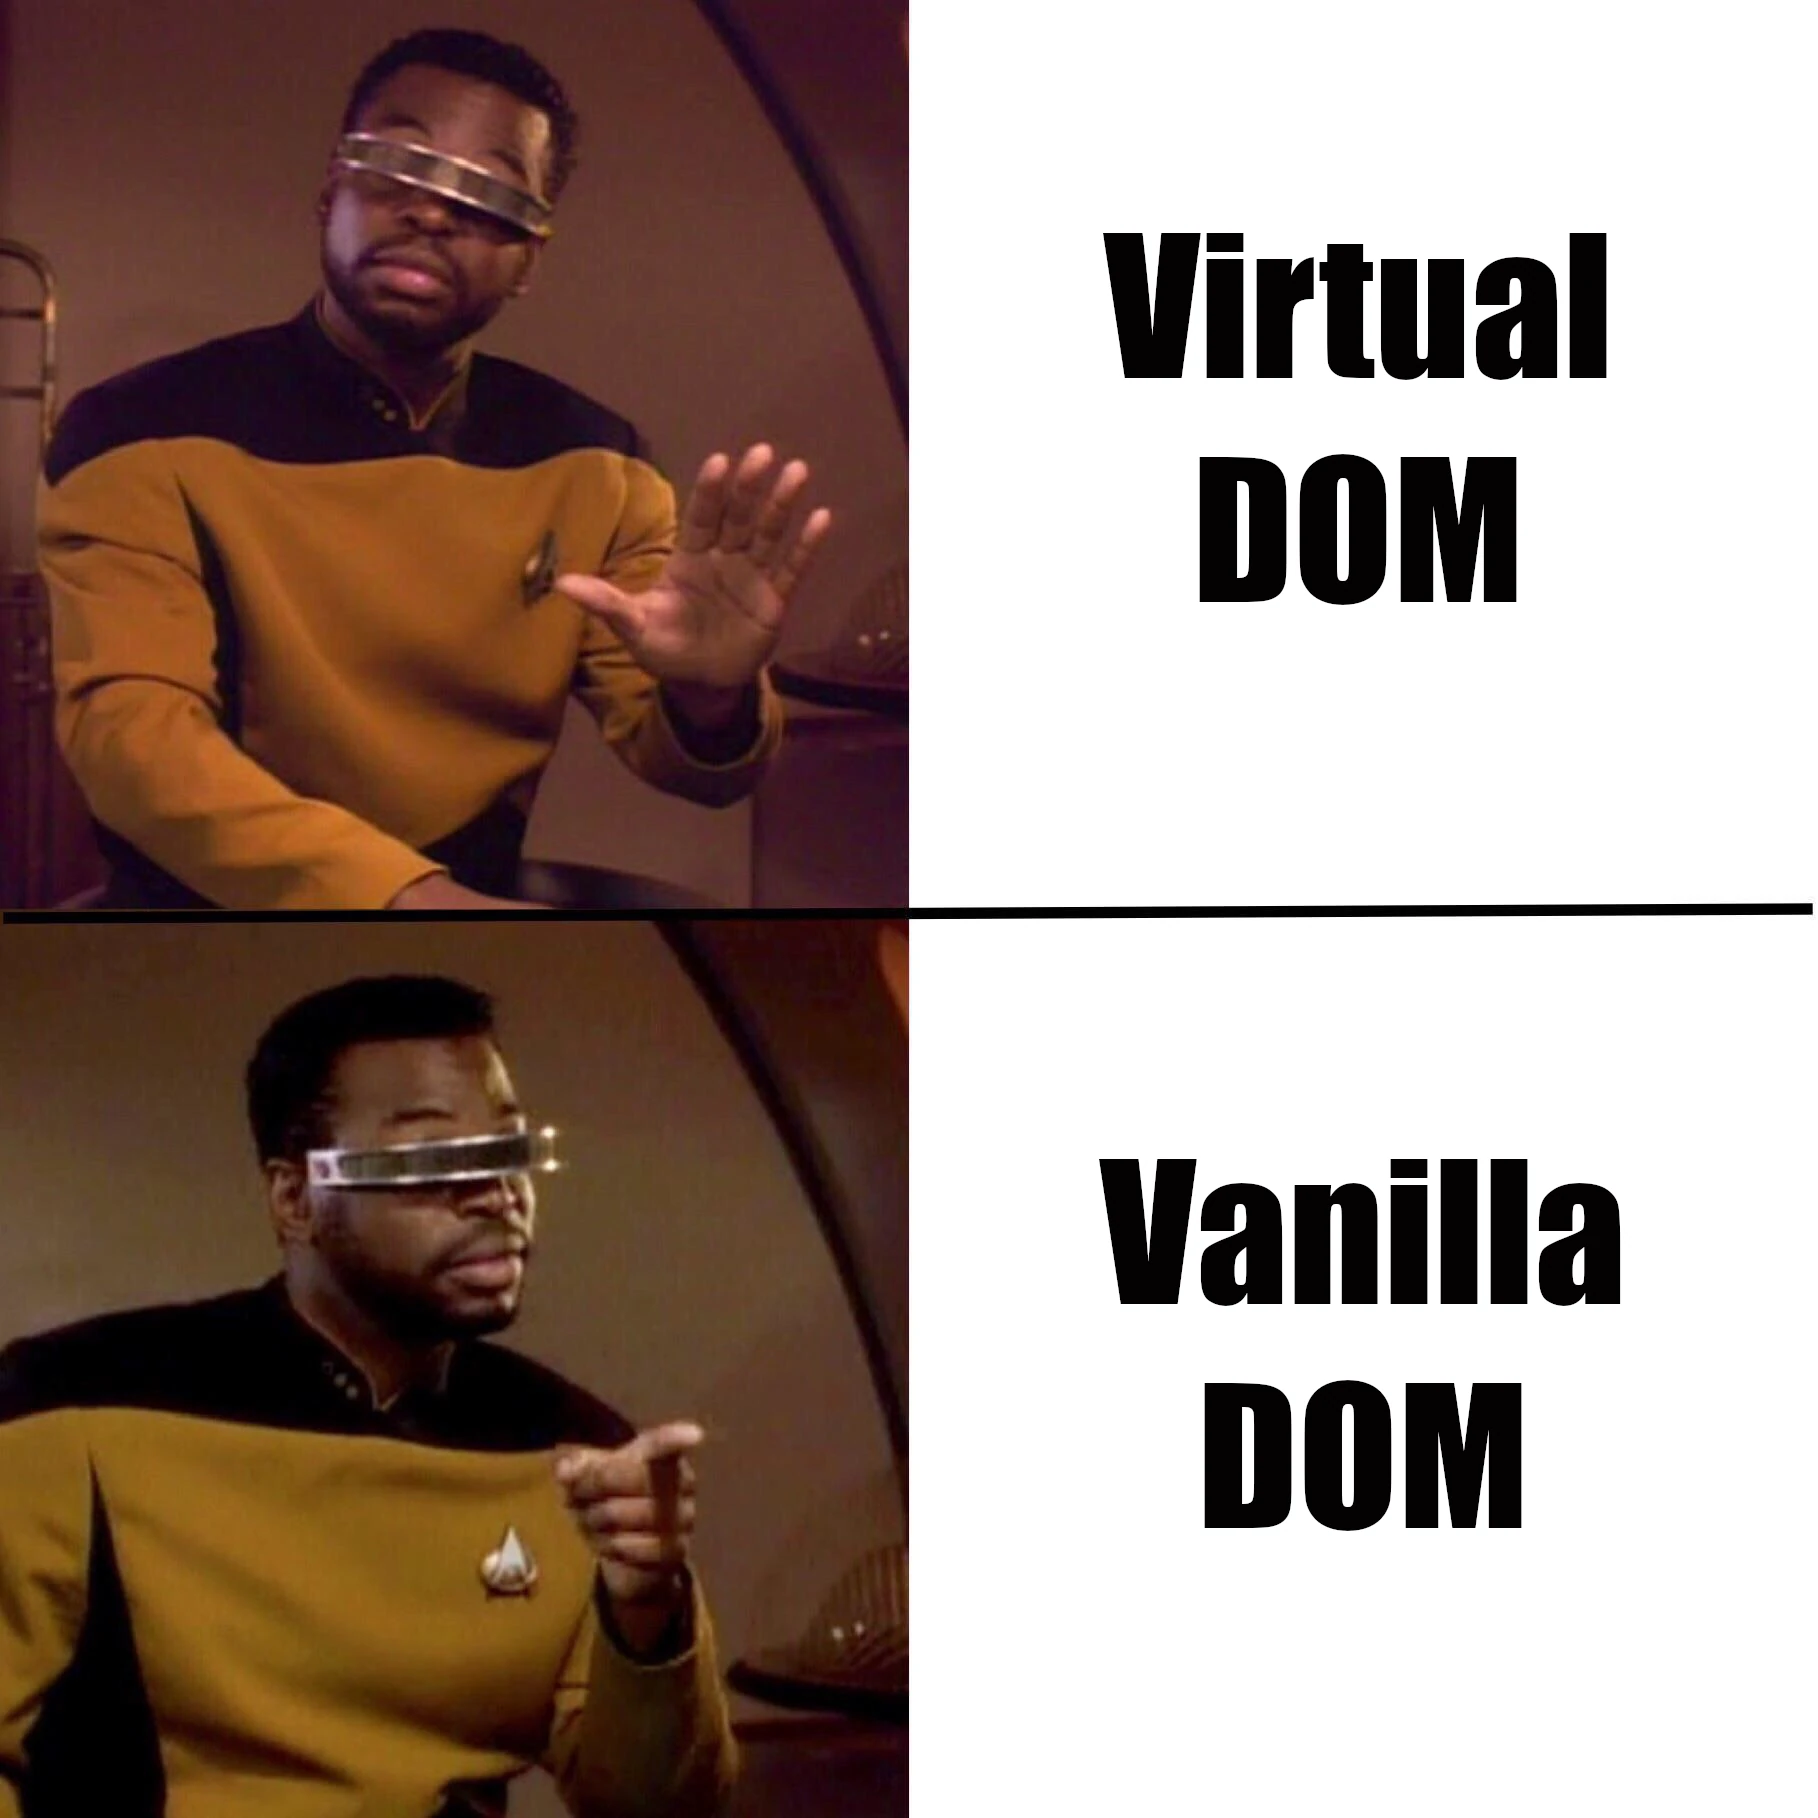 geordiposting meme - virtual dom vs vanilla dom